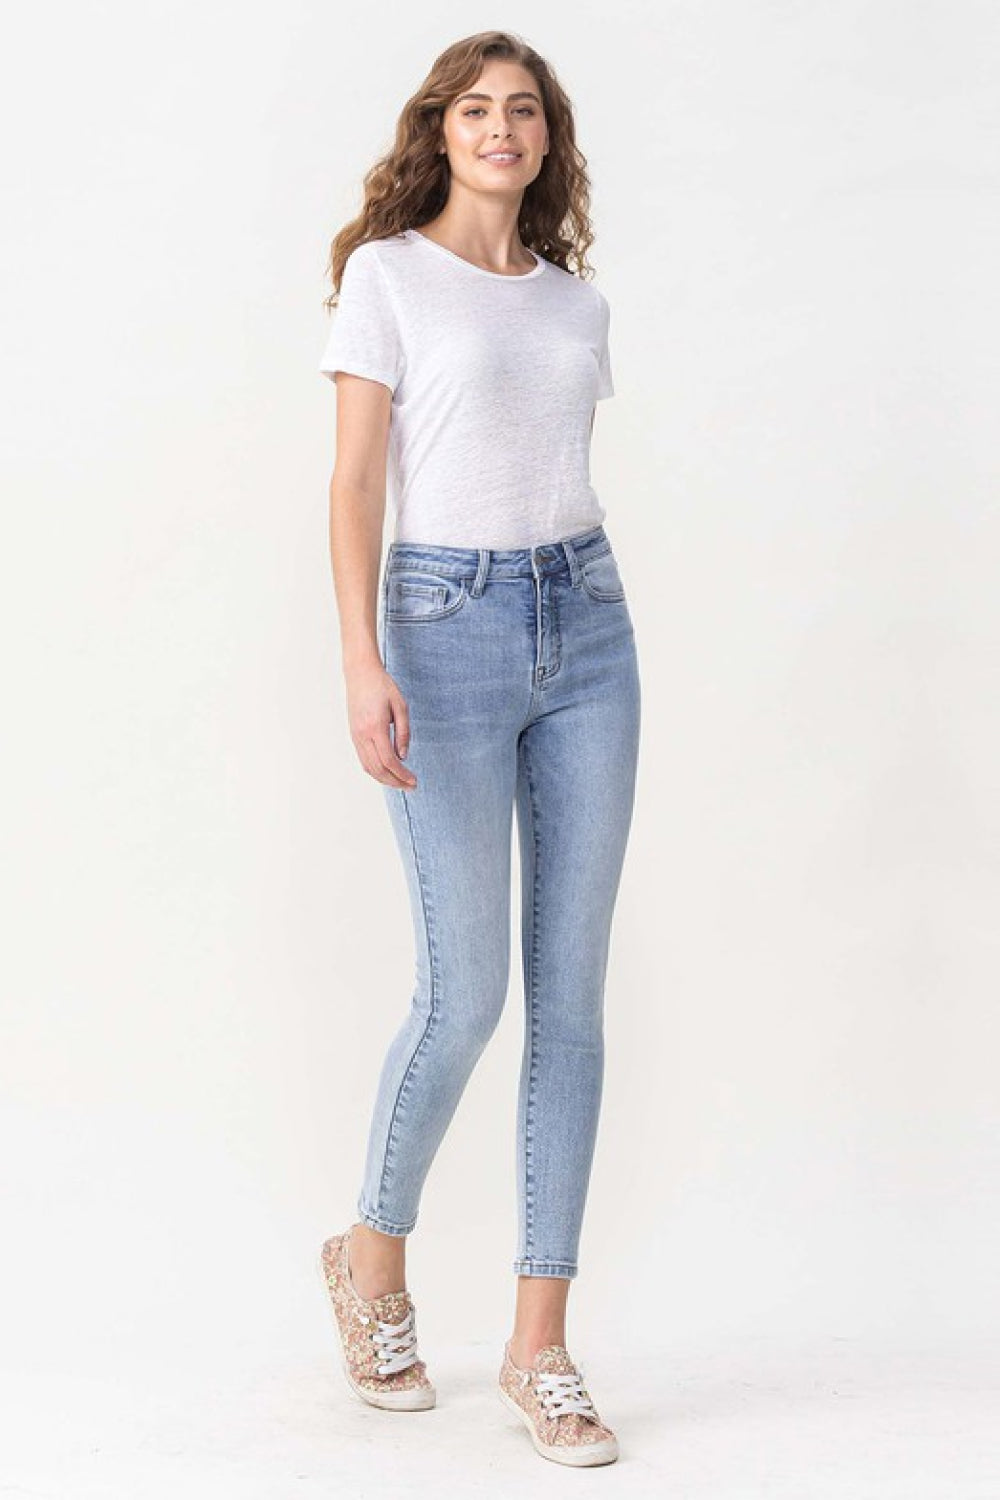 Lovervet Talia High Rise Crop Skinny Jeans